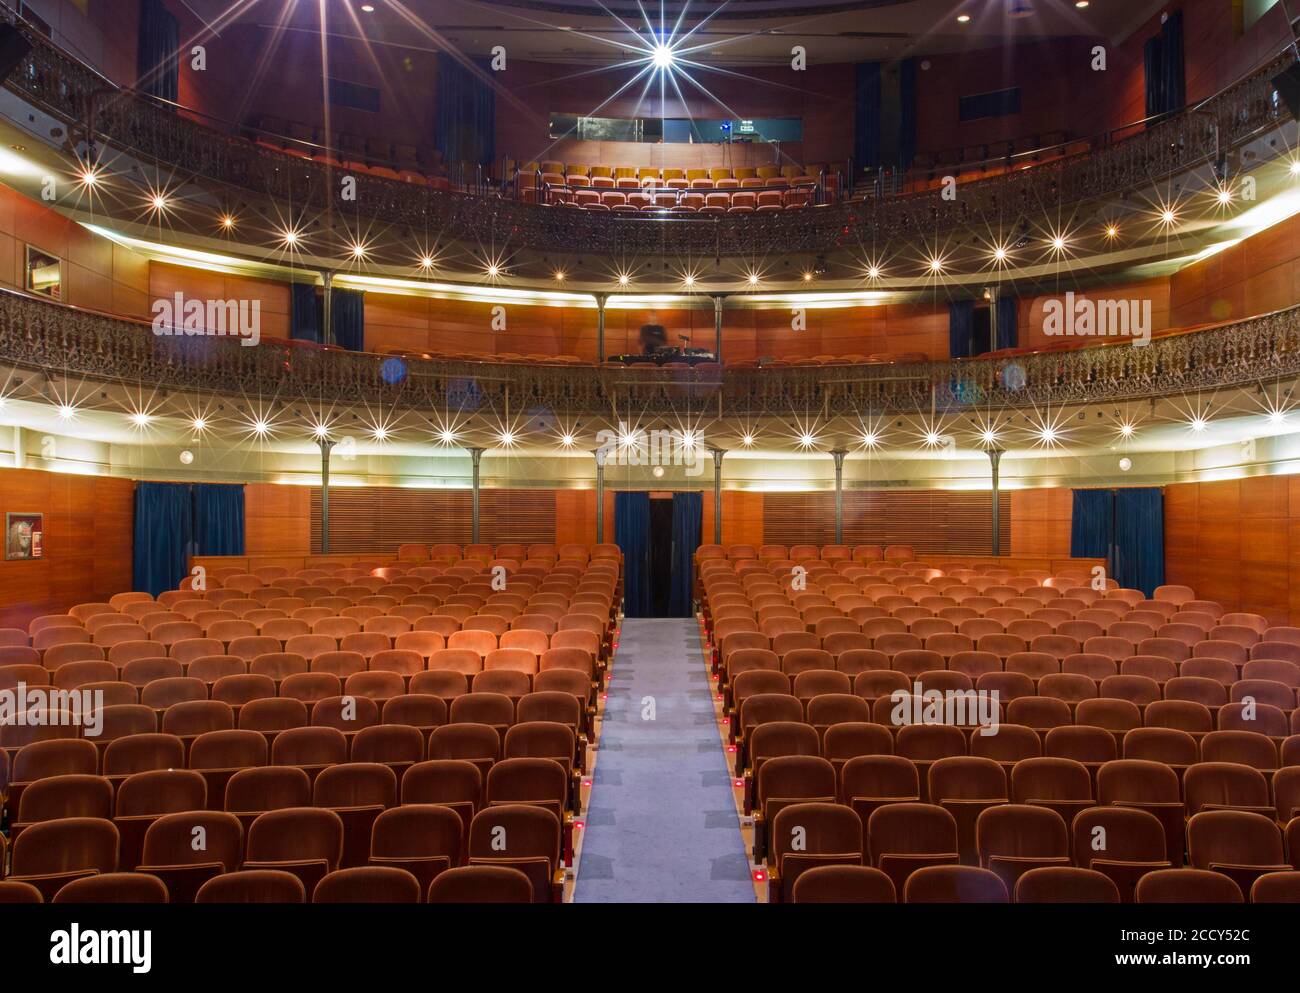 Interior view, Romea theatre, El Raval district, Barcelona, Spain Stock Photo